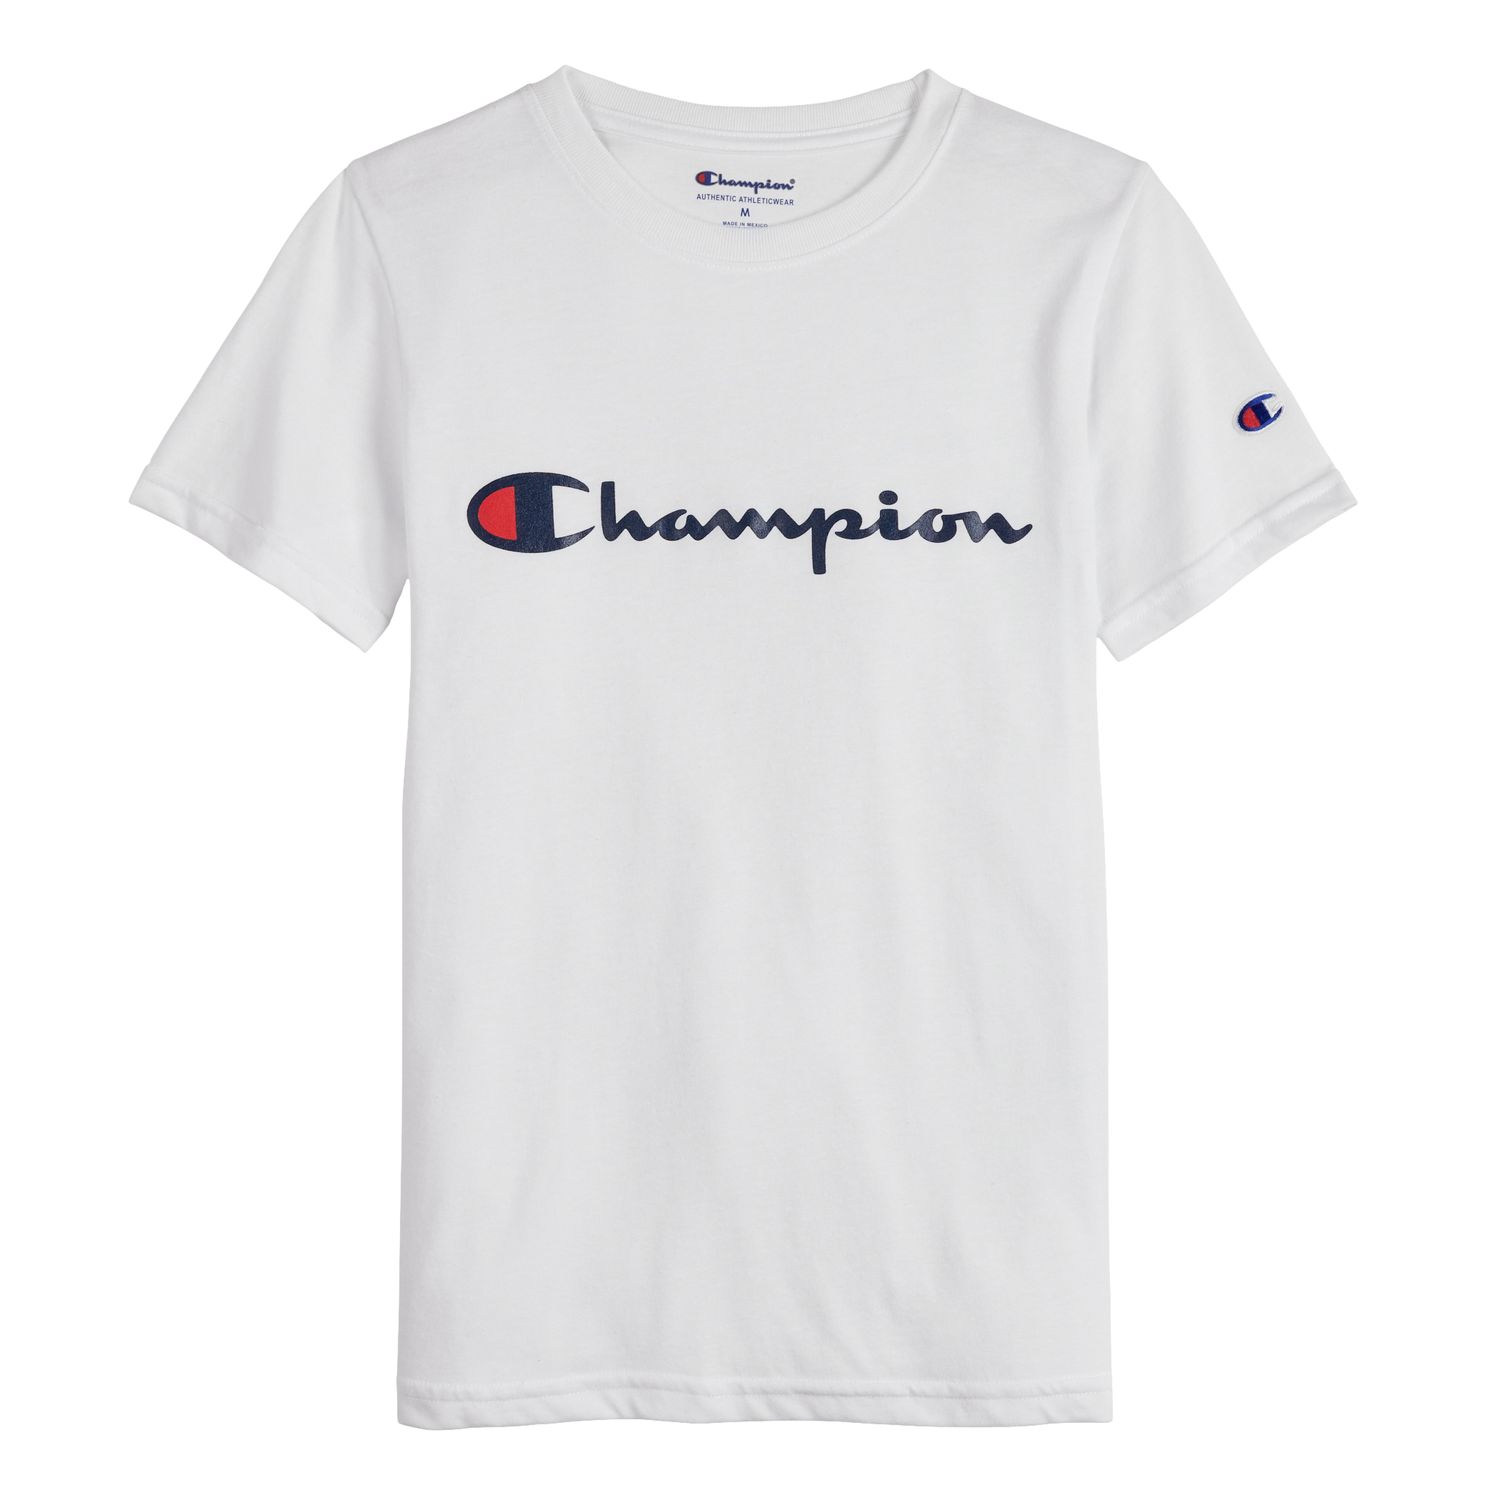 Boys Champion T-Shirts Kids Tops 